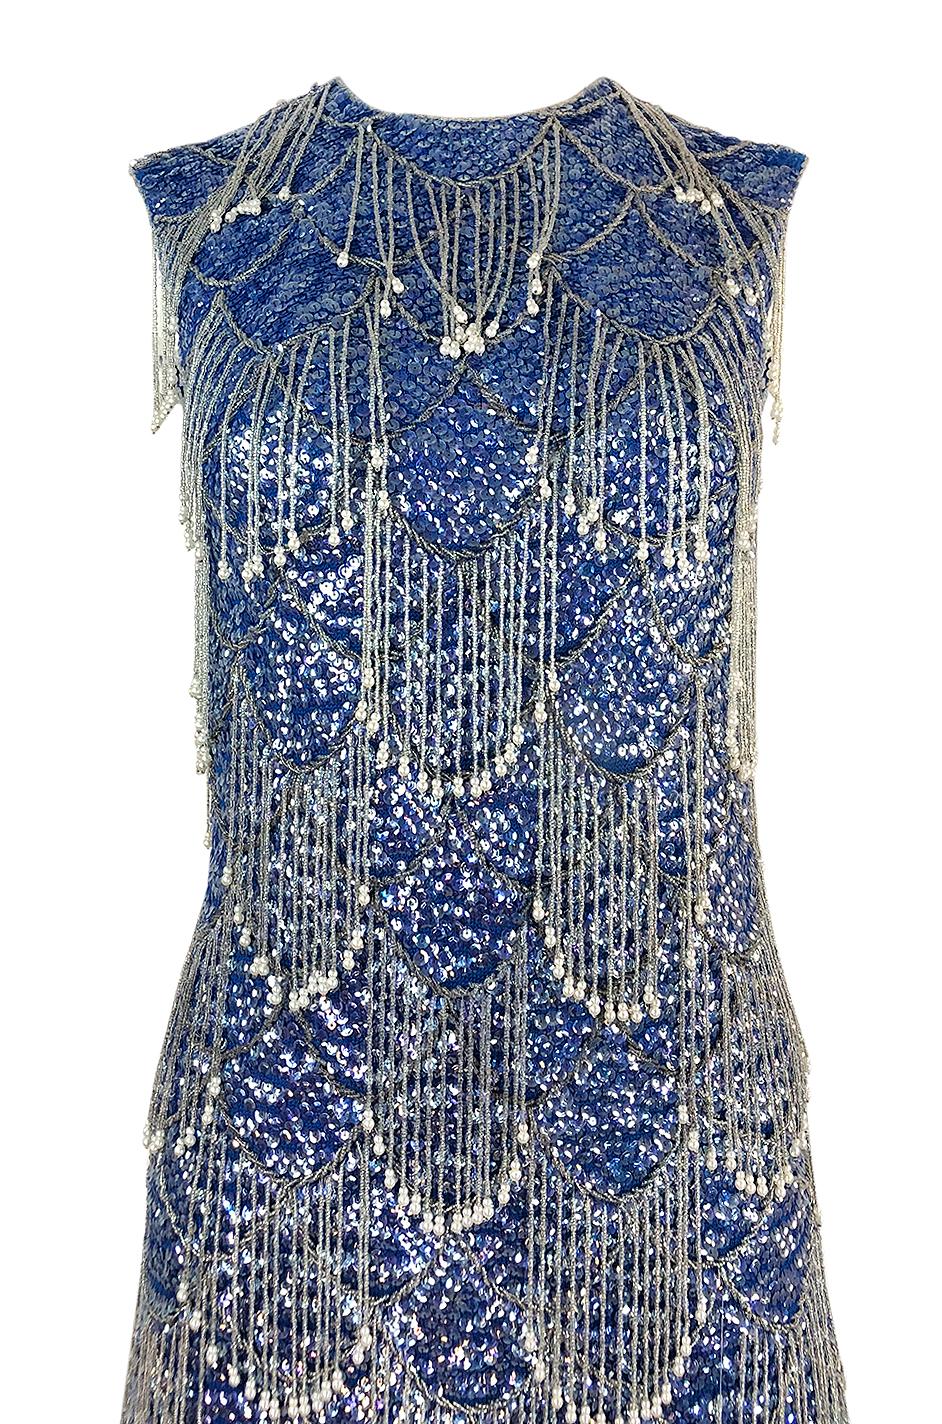 1950s Sorelle Fontana Alta Moda Couture Sequin, Bead & Pearl Dress 1